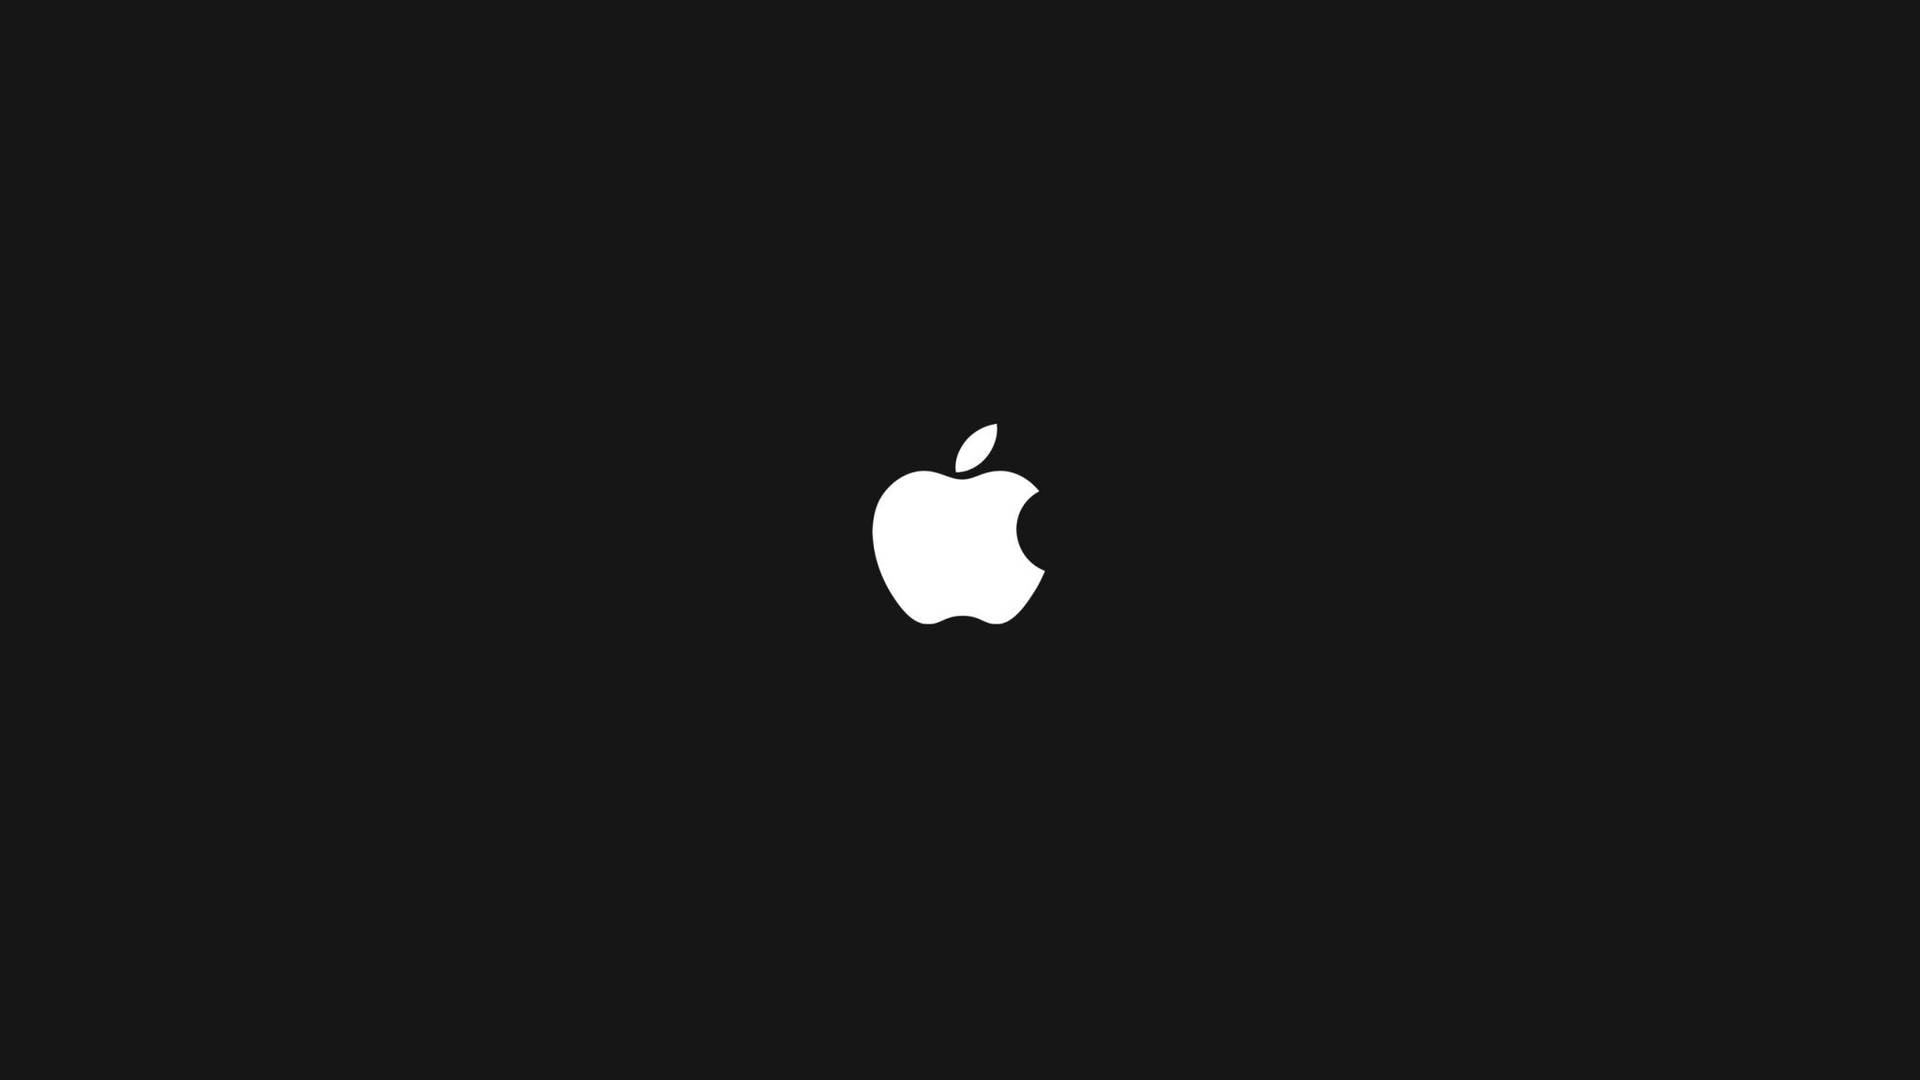 Apple Hd Desktop Black And White Picture